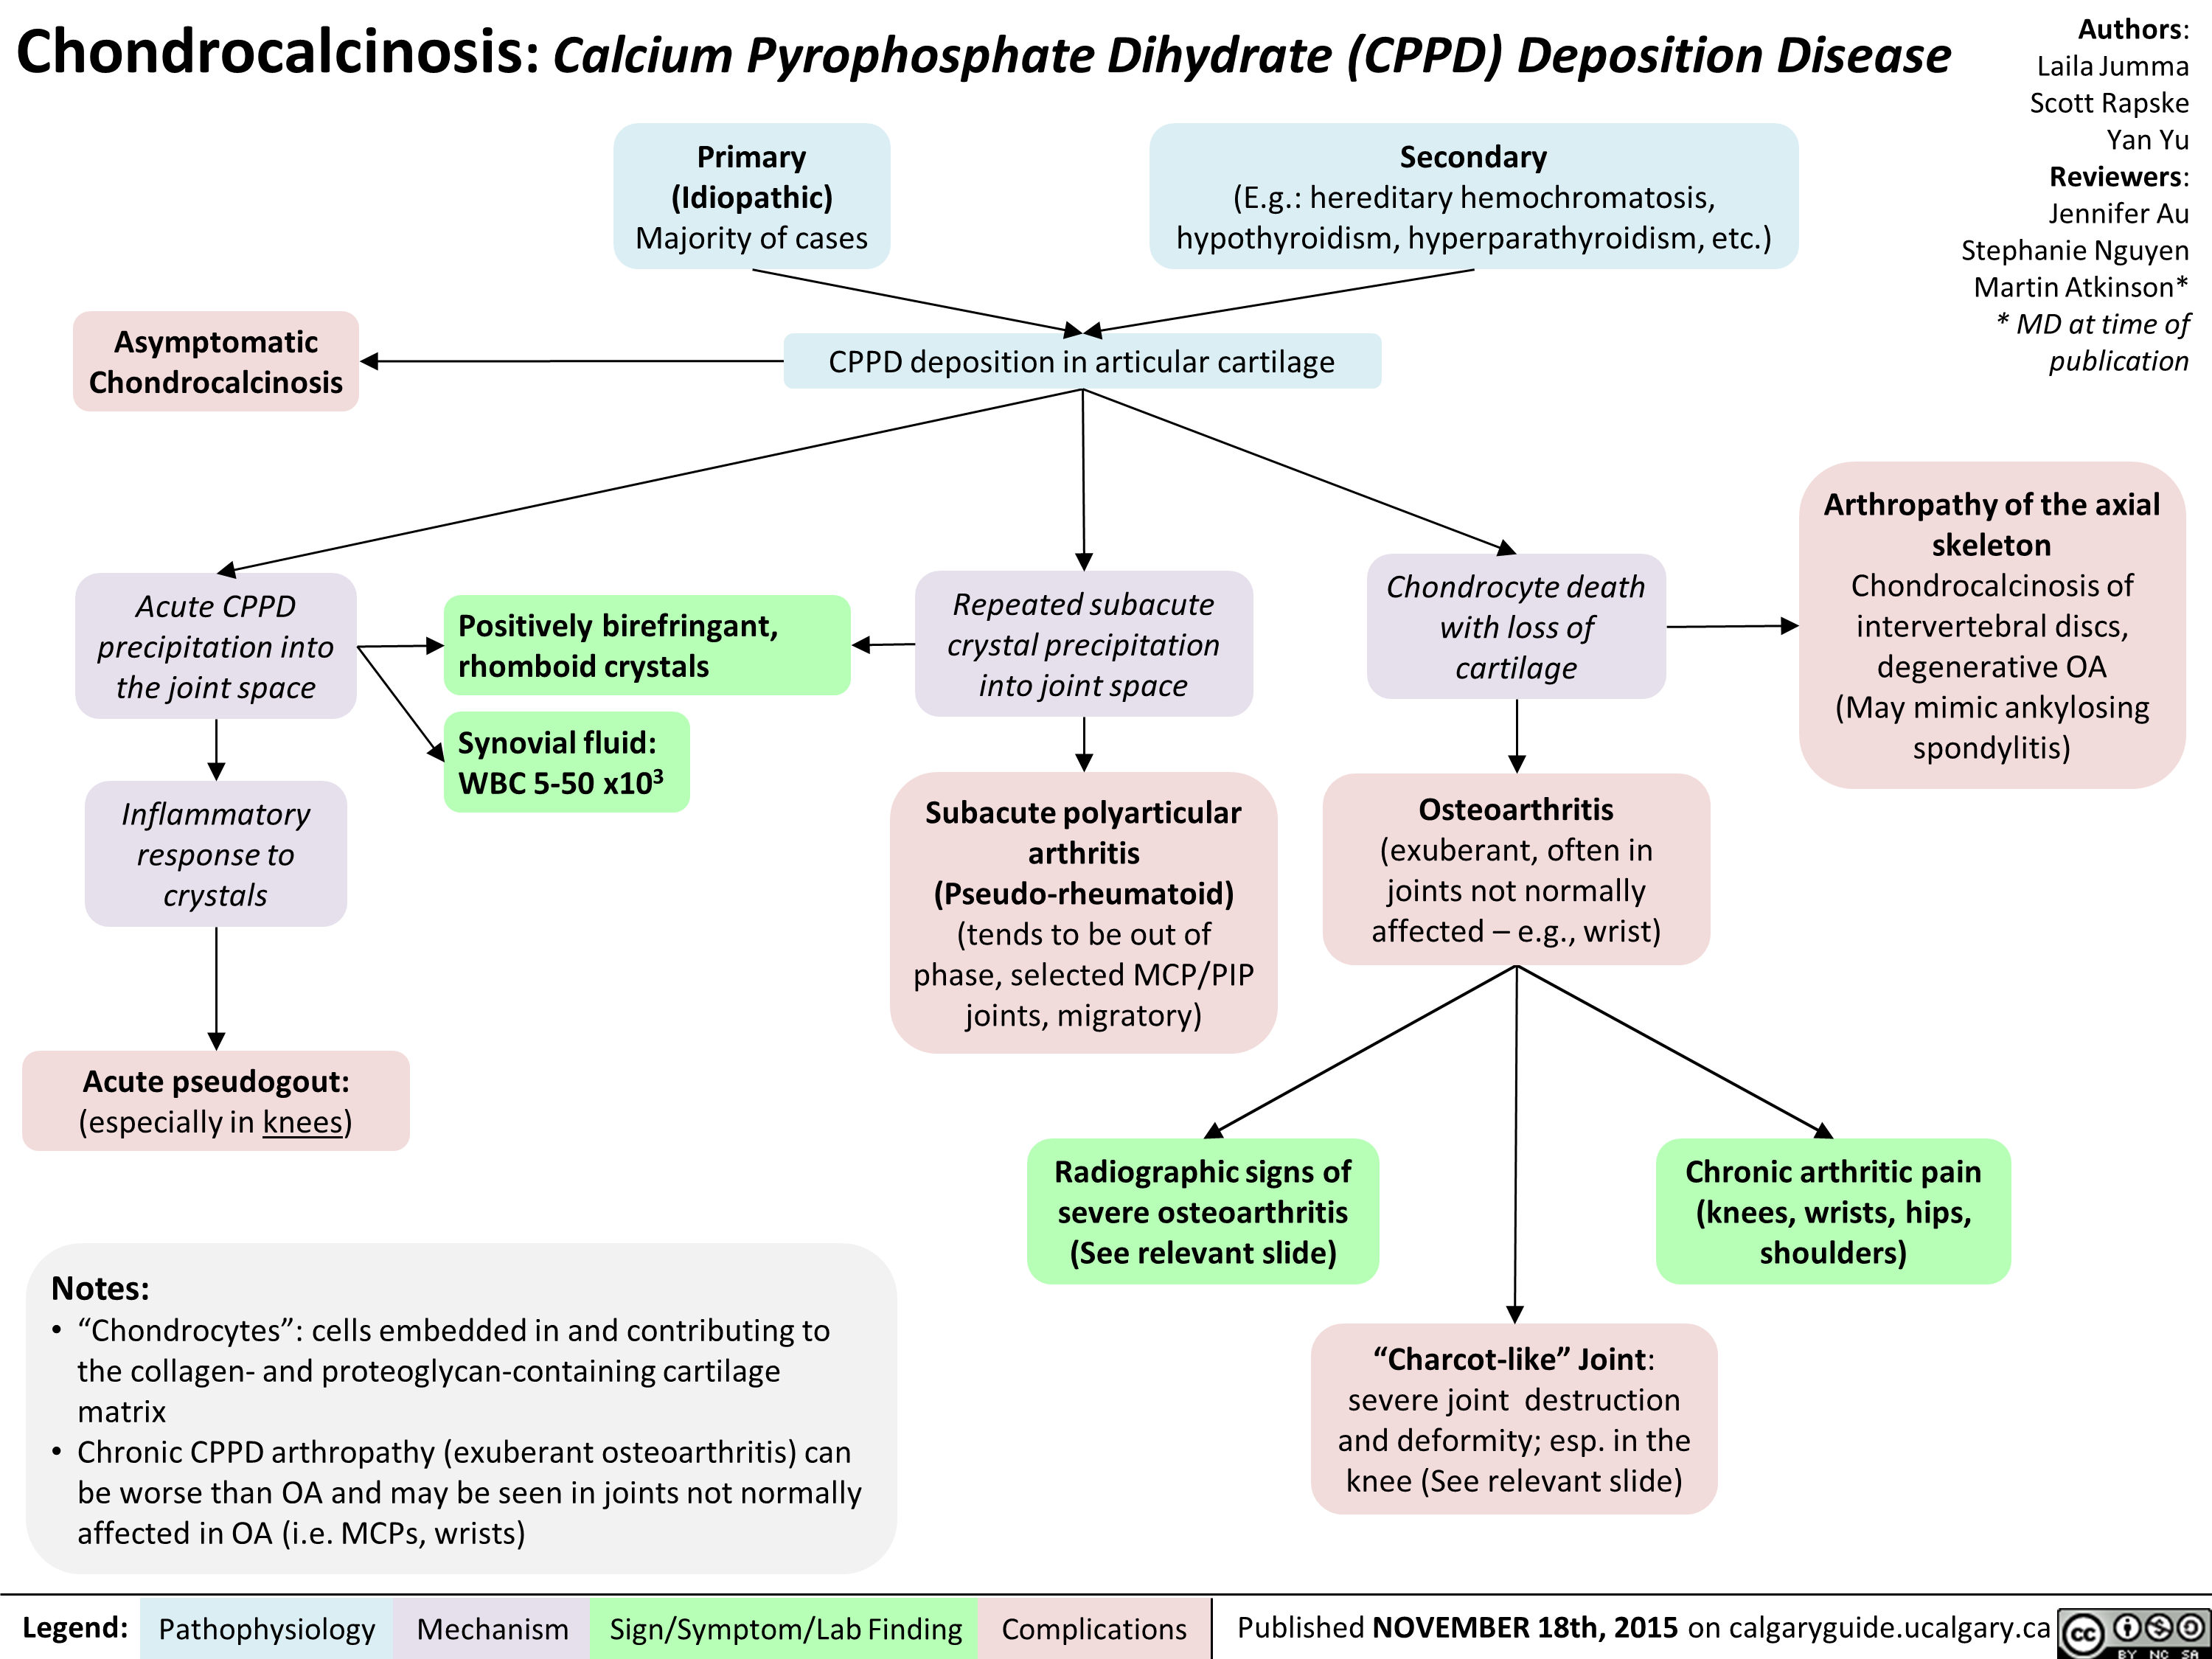 Chondrocalcinosis Calcium Pyrophosphate Dihydrate Deposition Disease